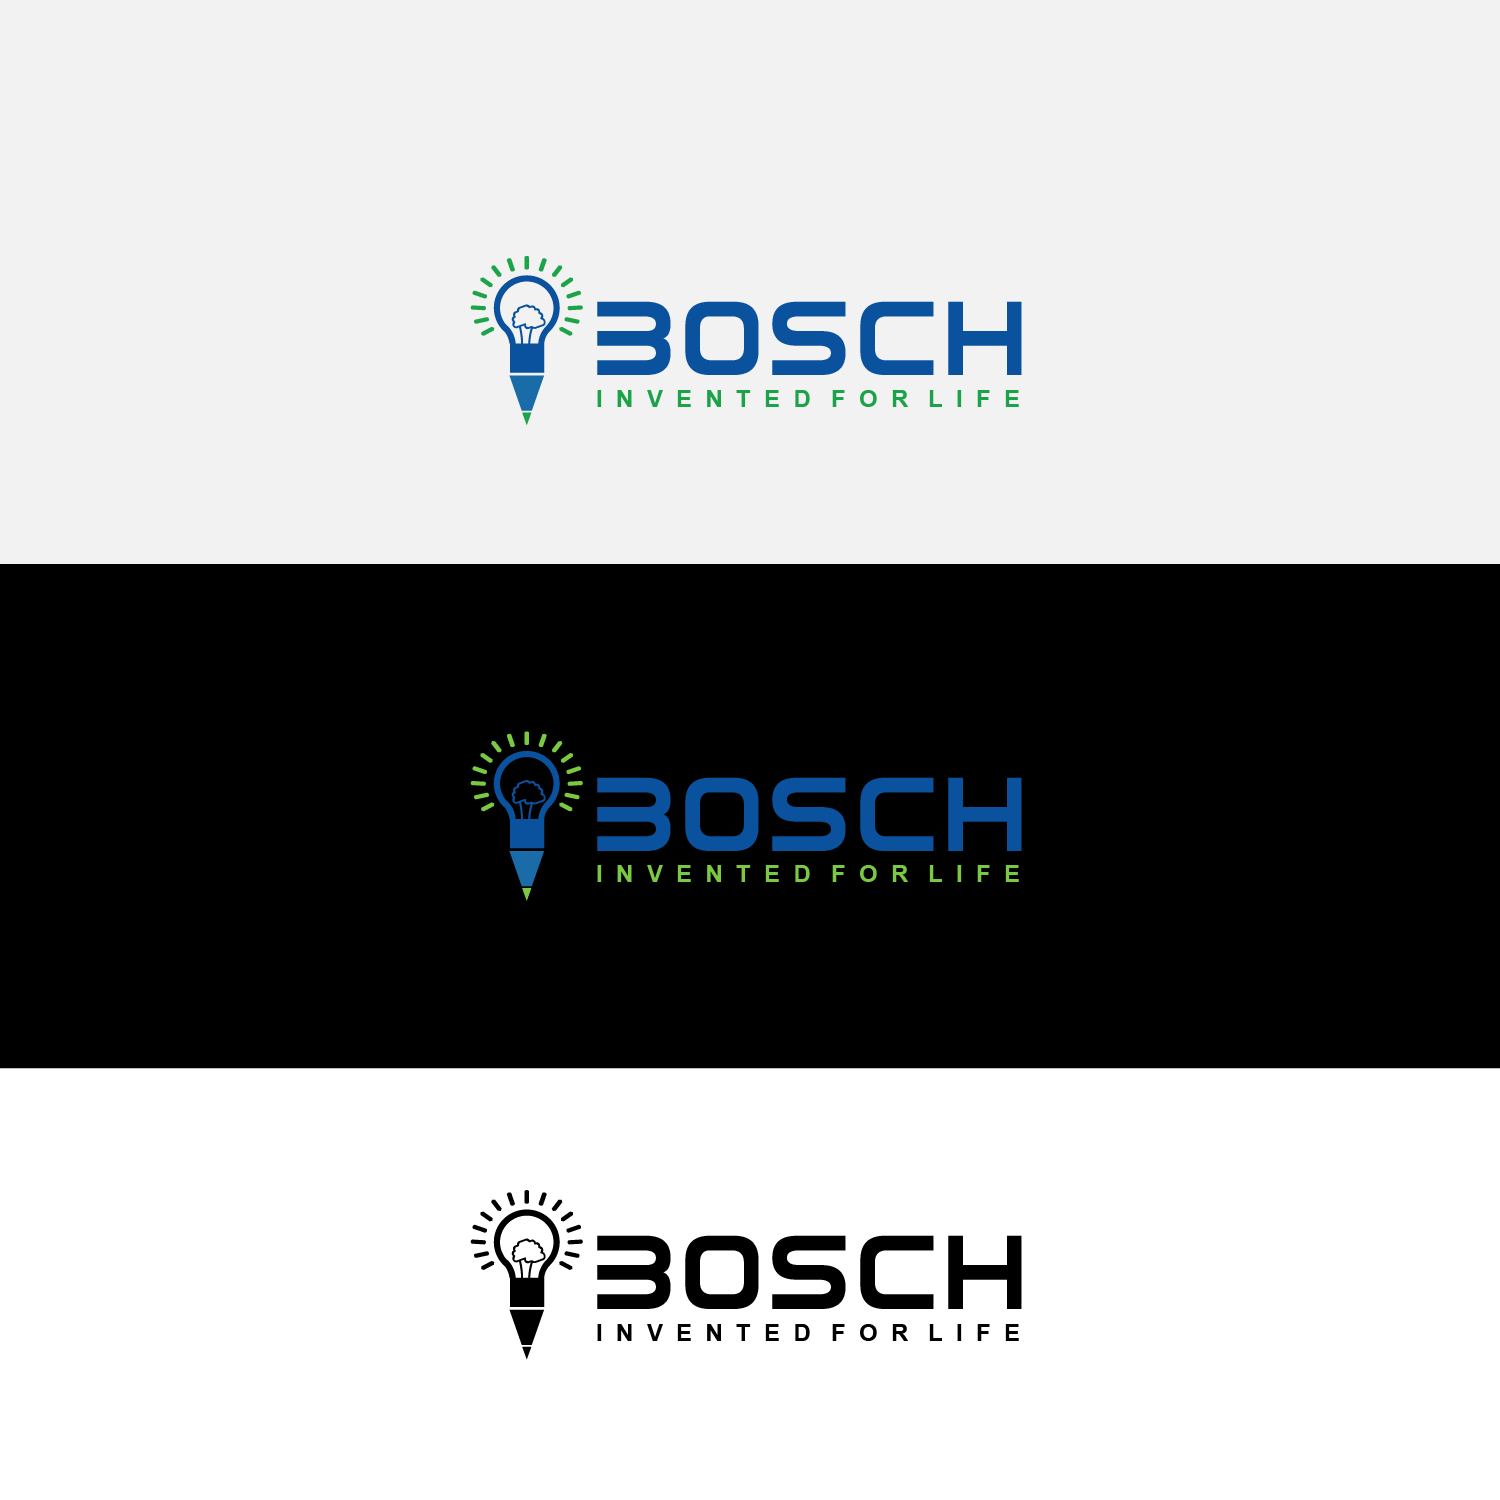 Bosch Invented for Life Logo - Playful, Modern, Engineering Logo Design for BOSCH, INVENTED FOR